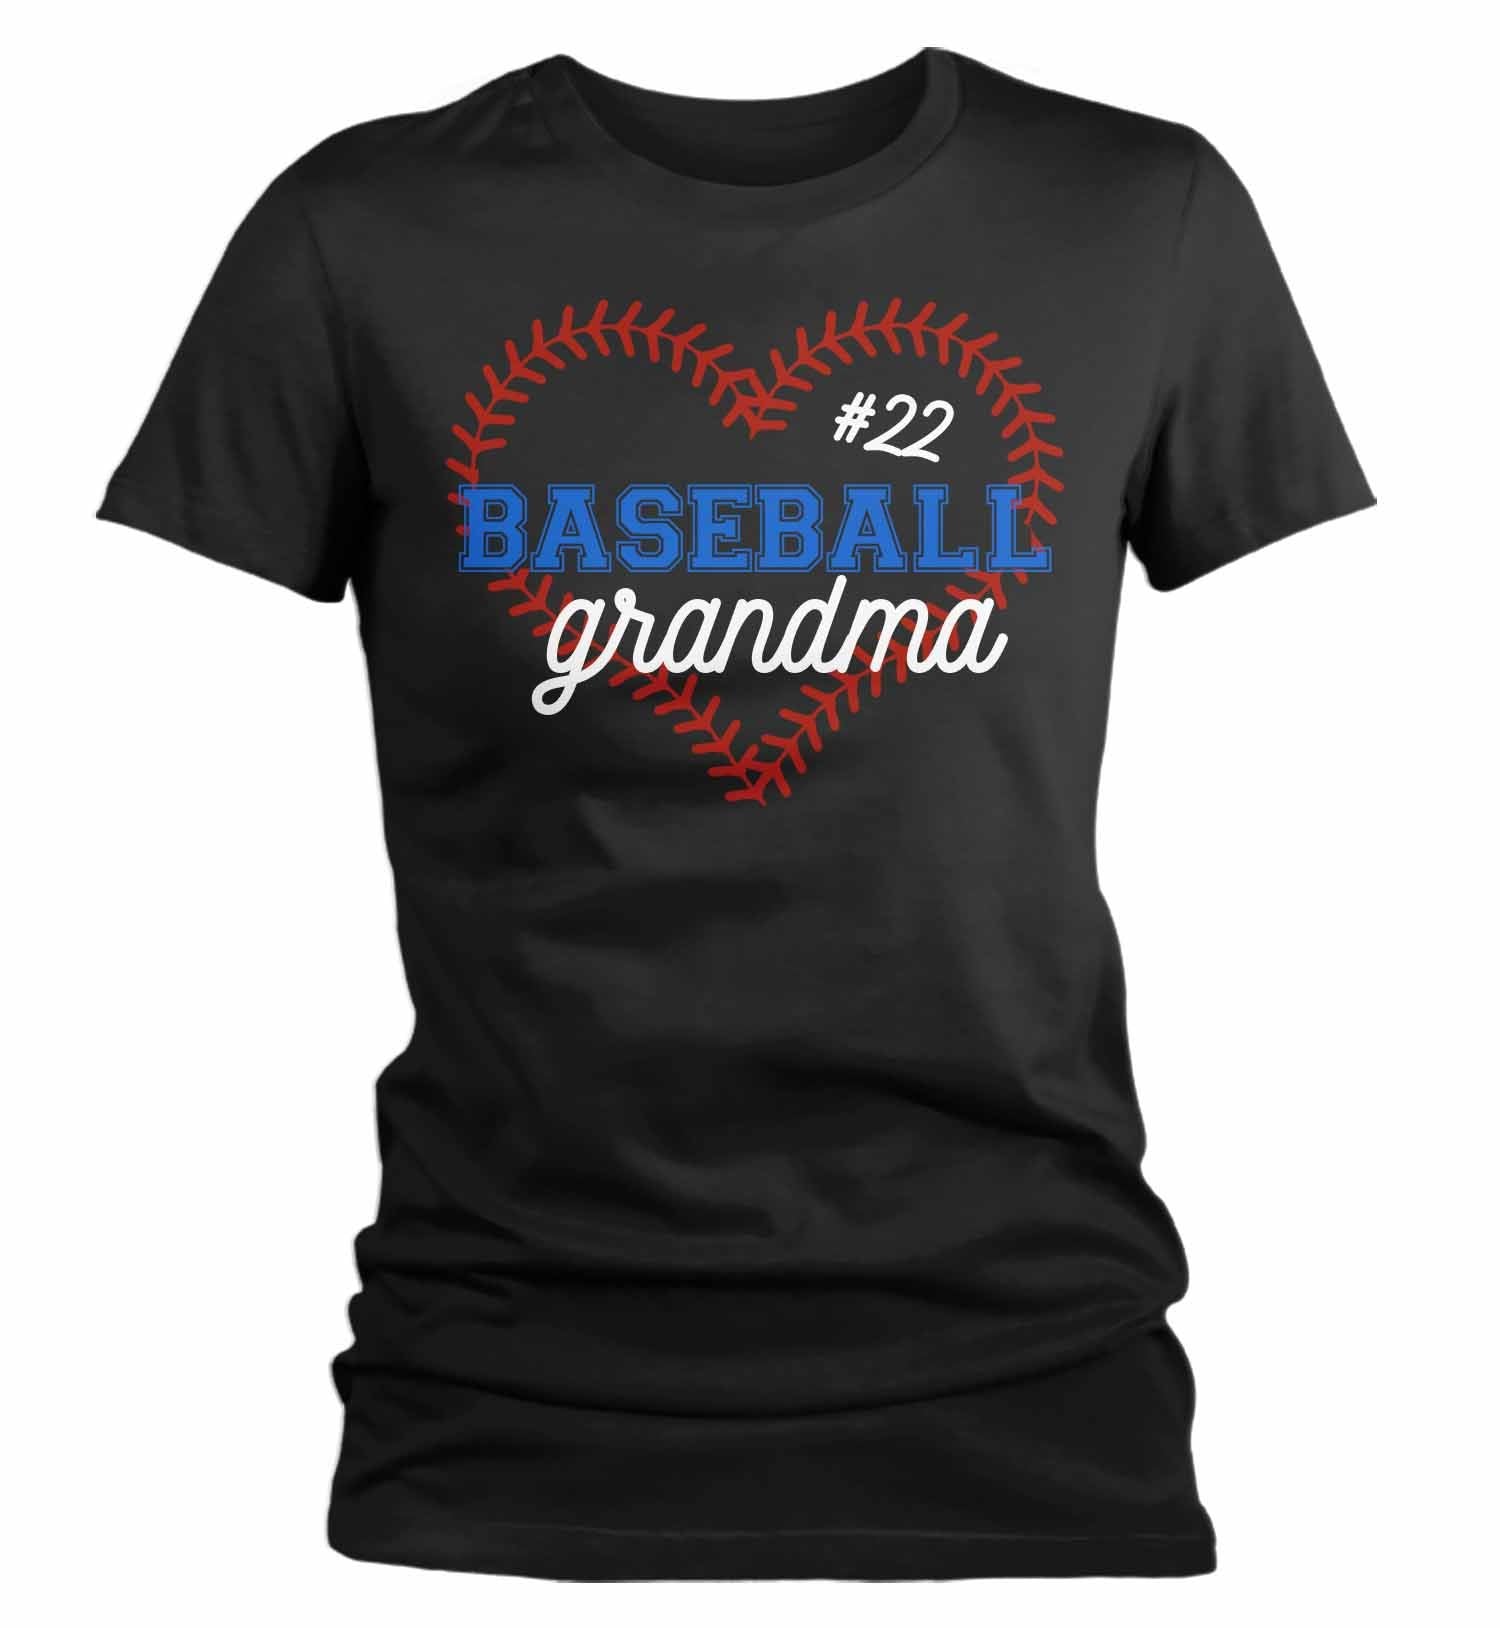 custom made baseball shirts